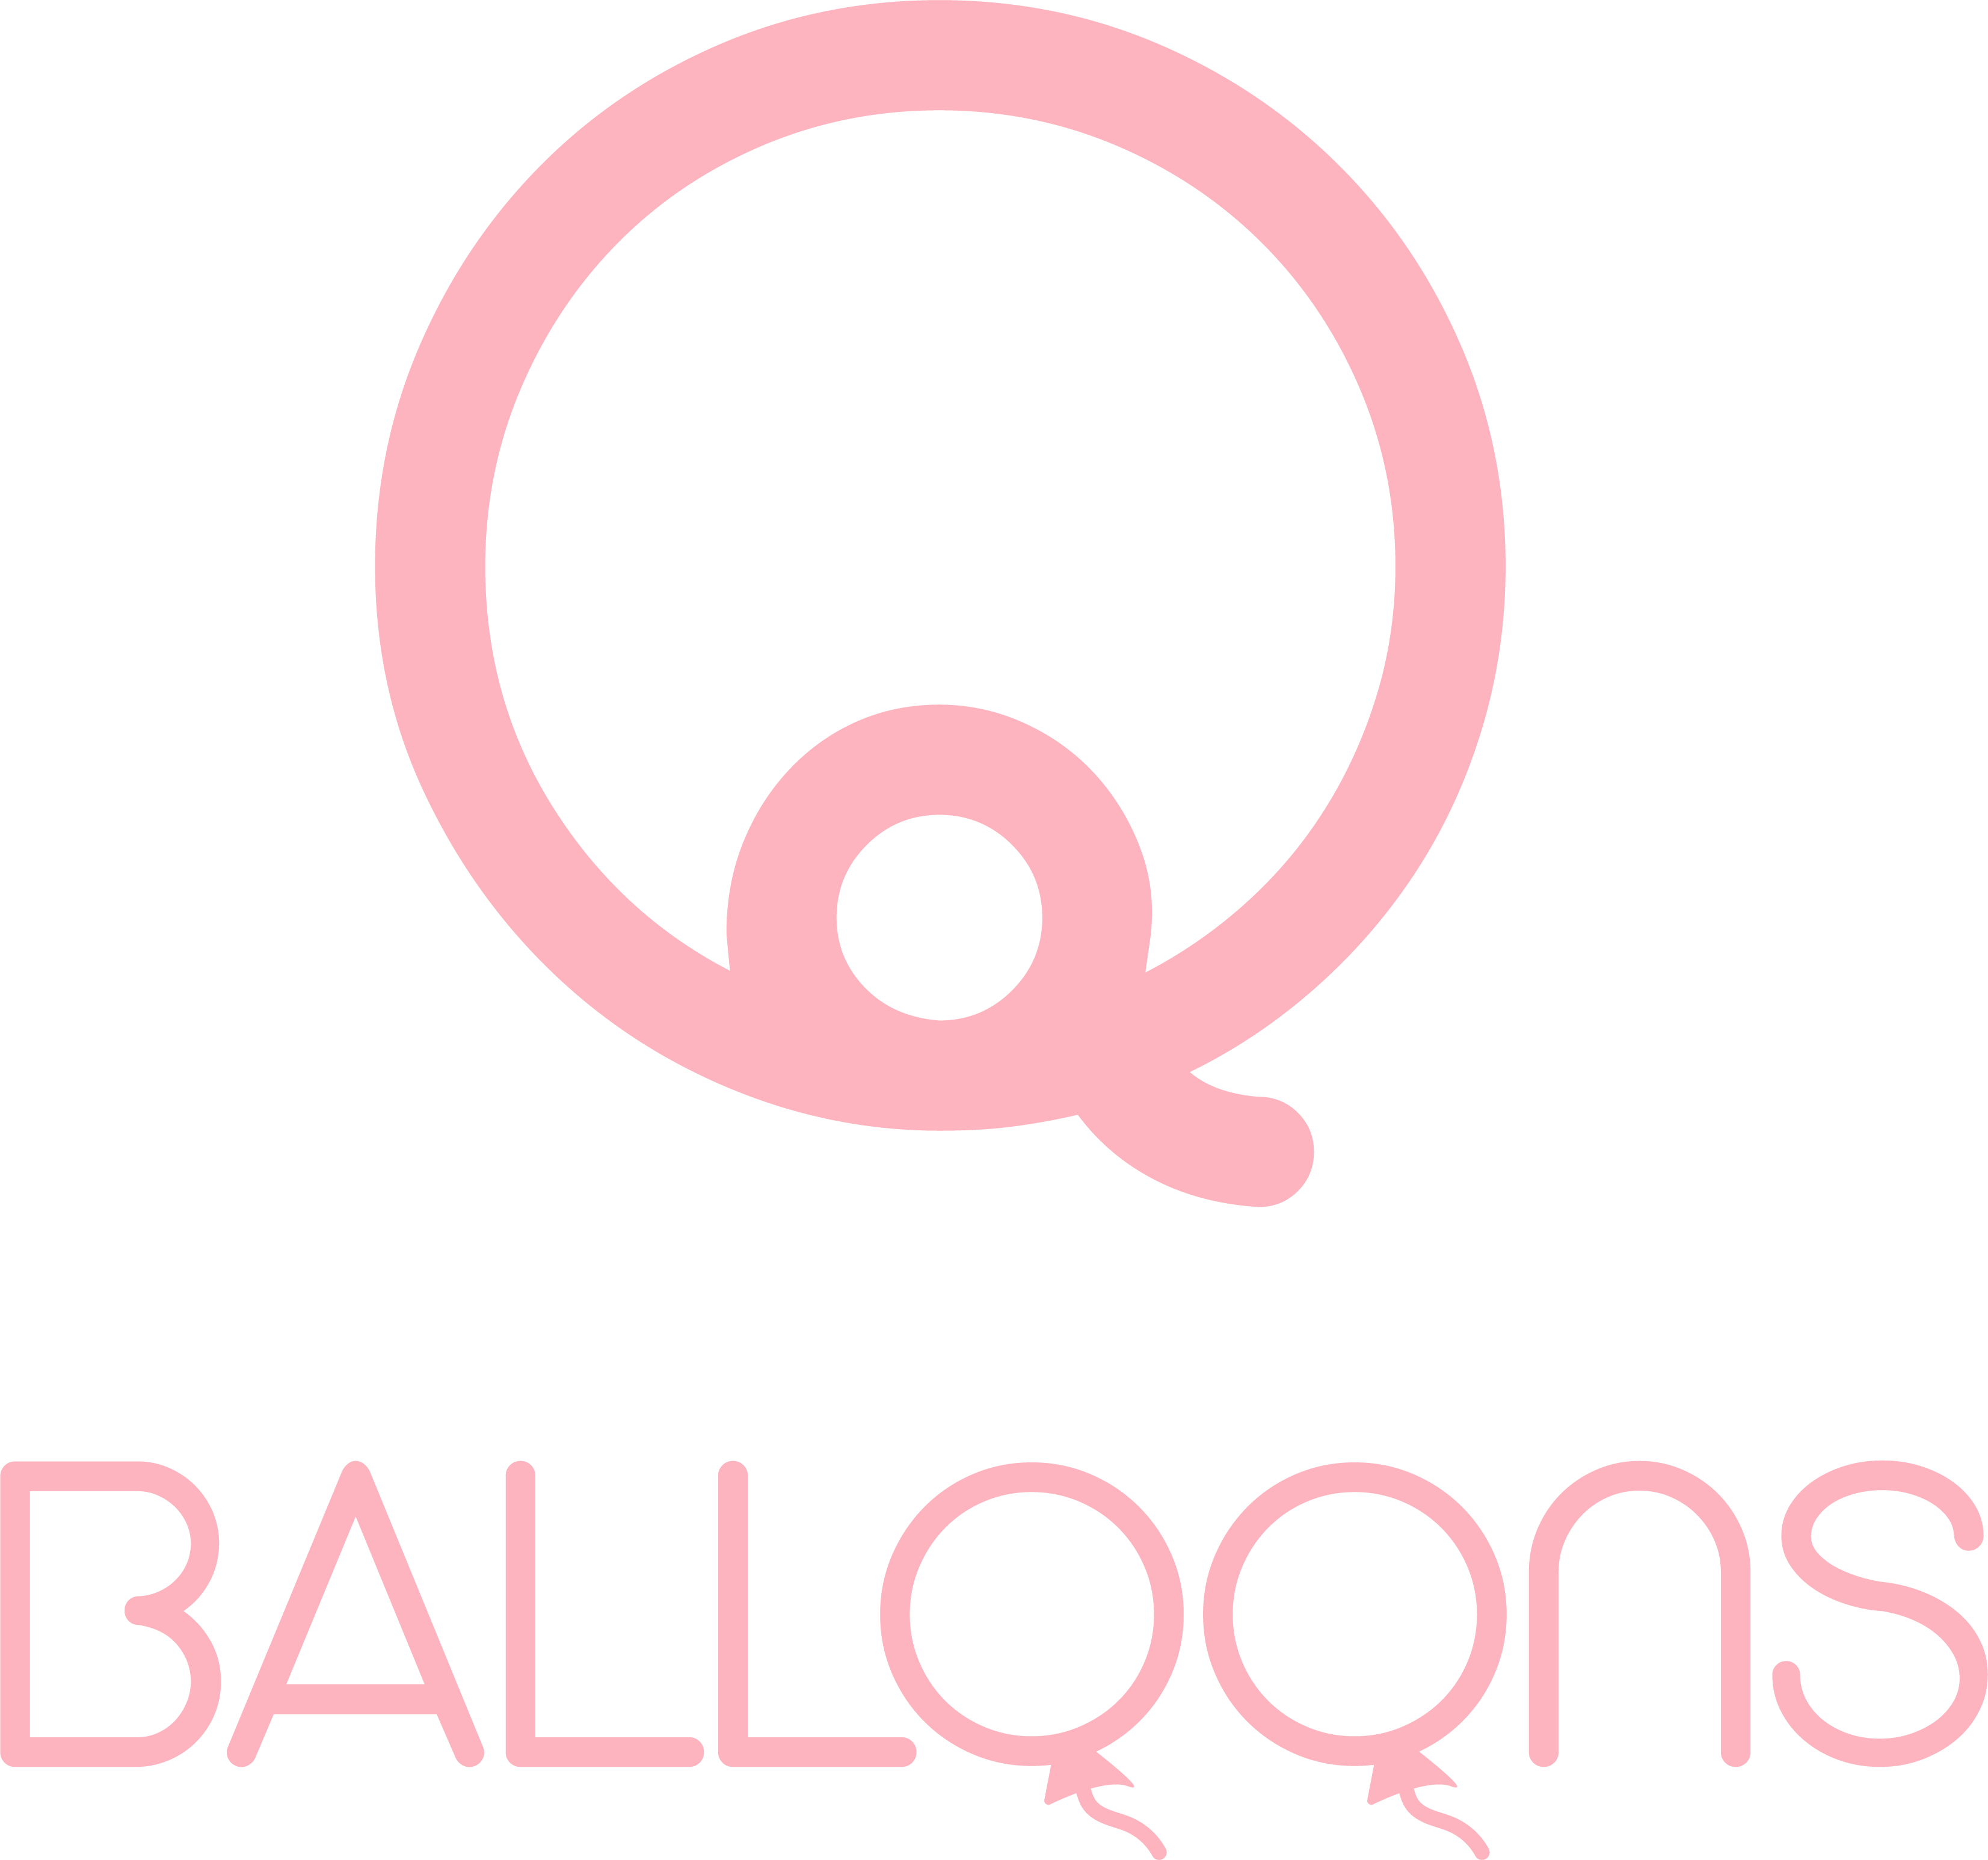 Qballoons